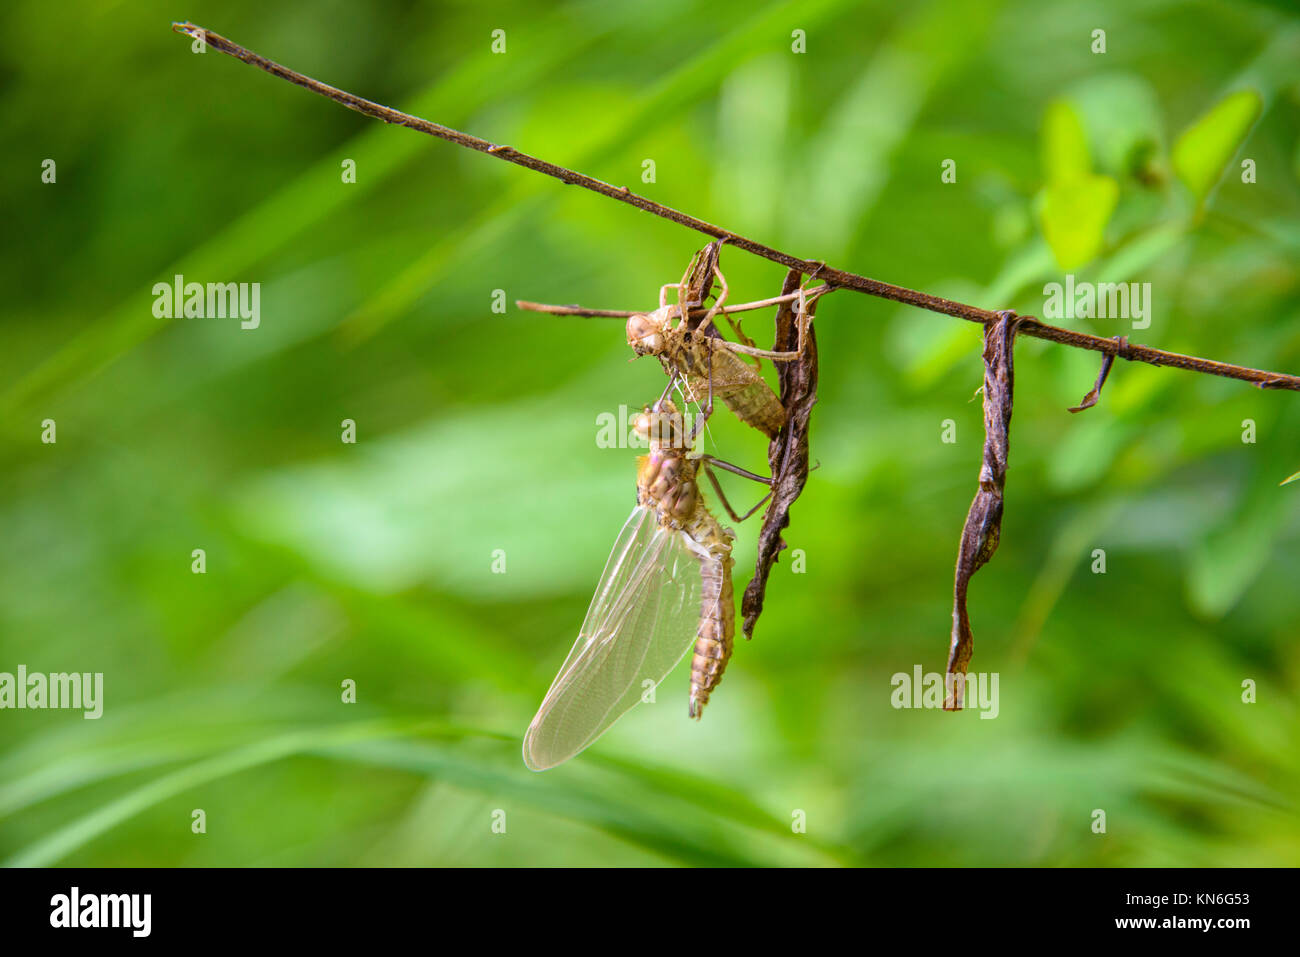 Dragonfly or Damselfly emerging from larvea, Plitvice Lakes National Park, Croatia Stock Photo